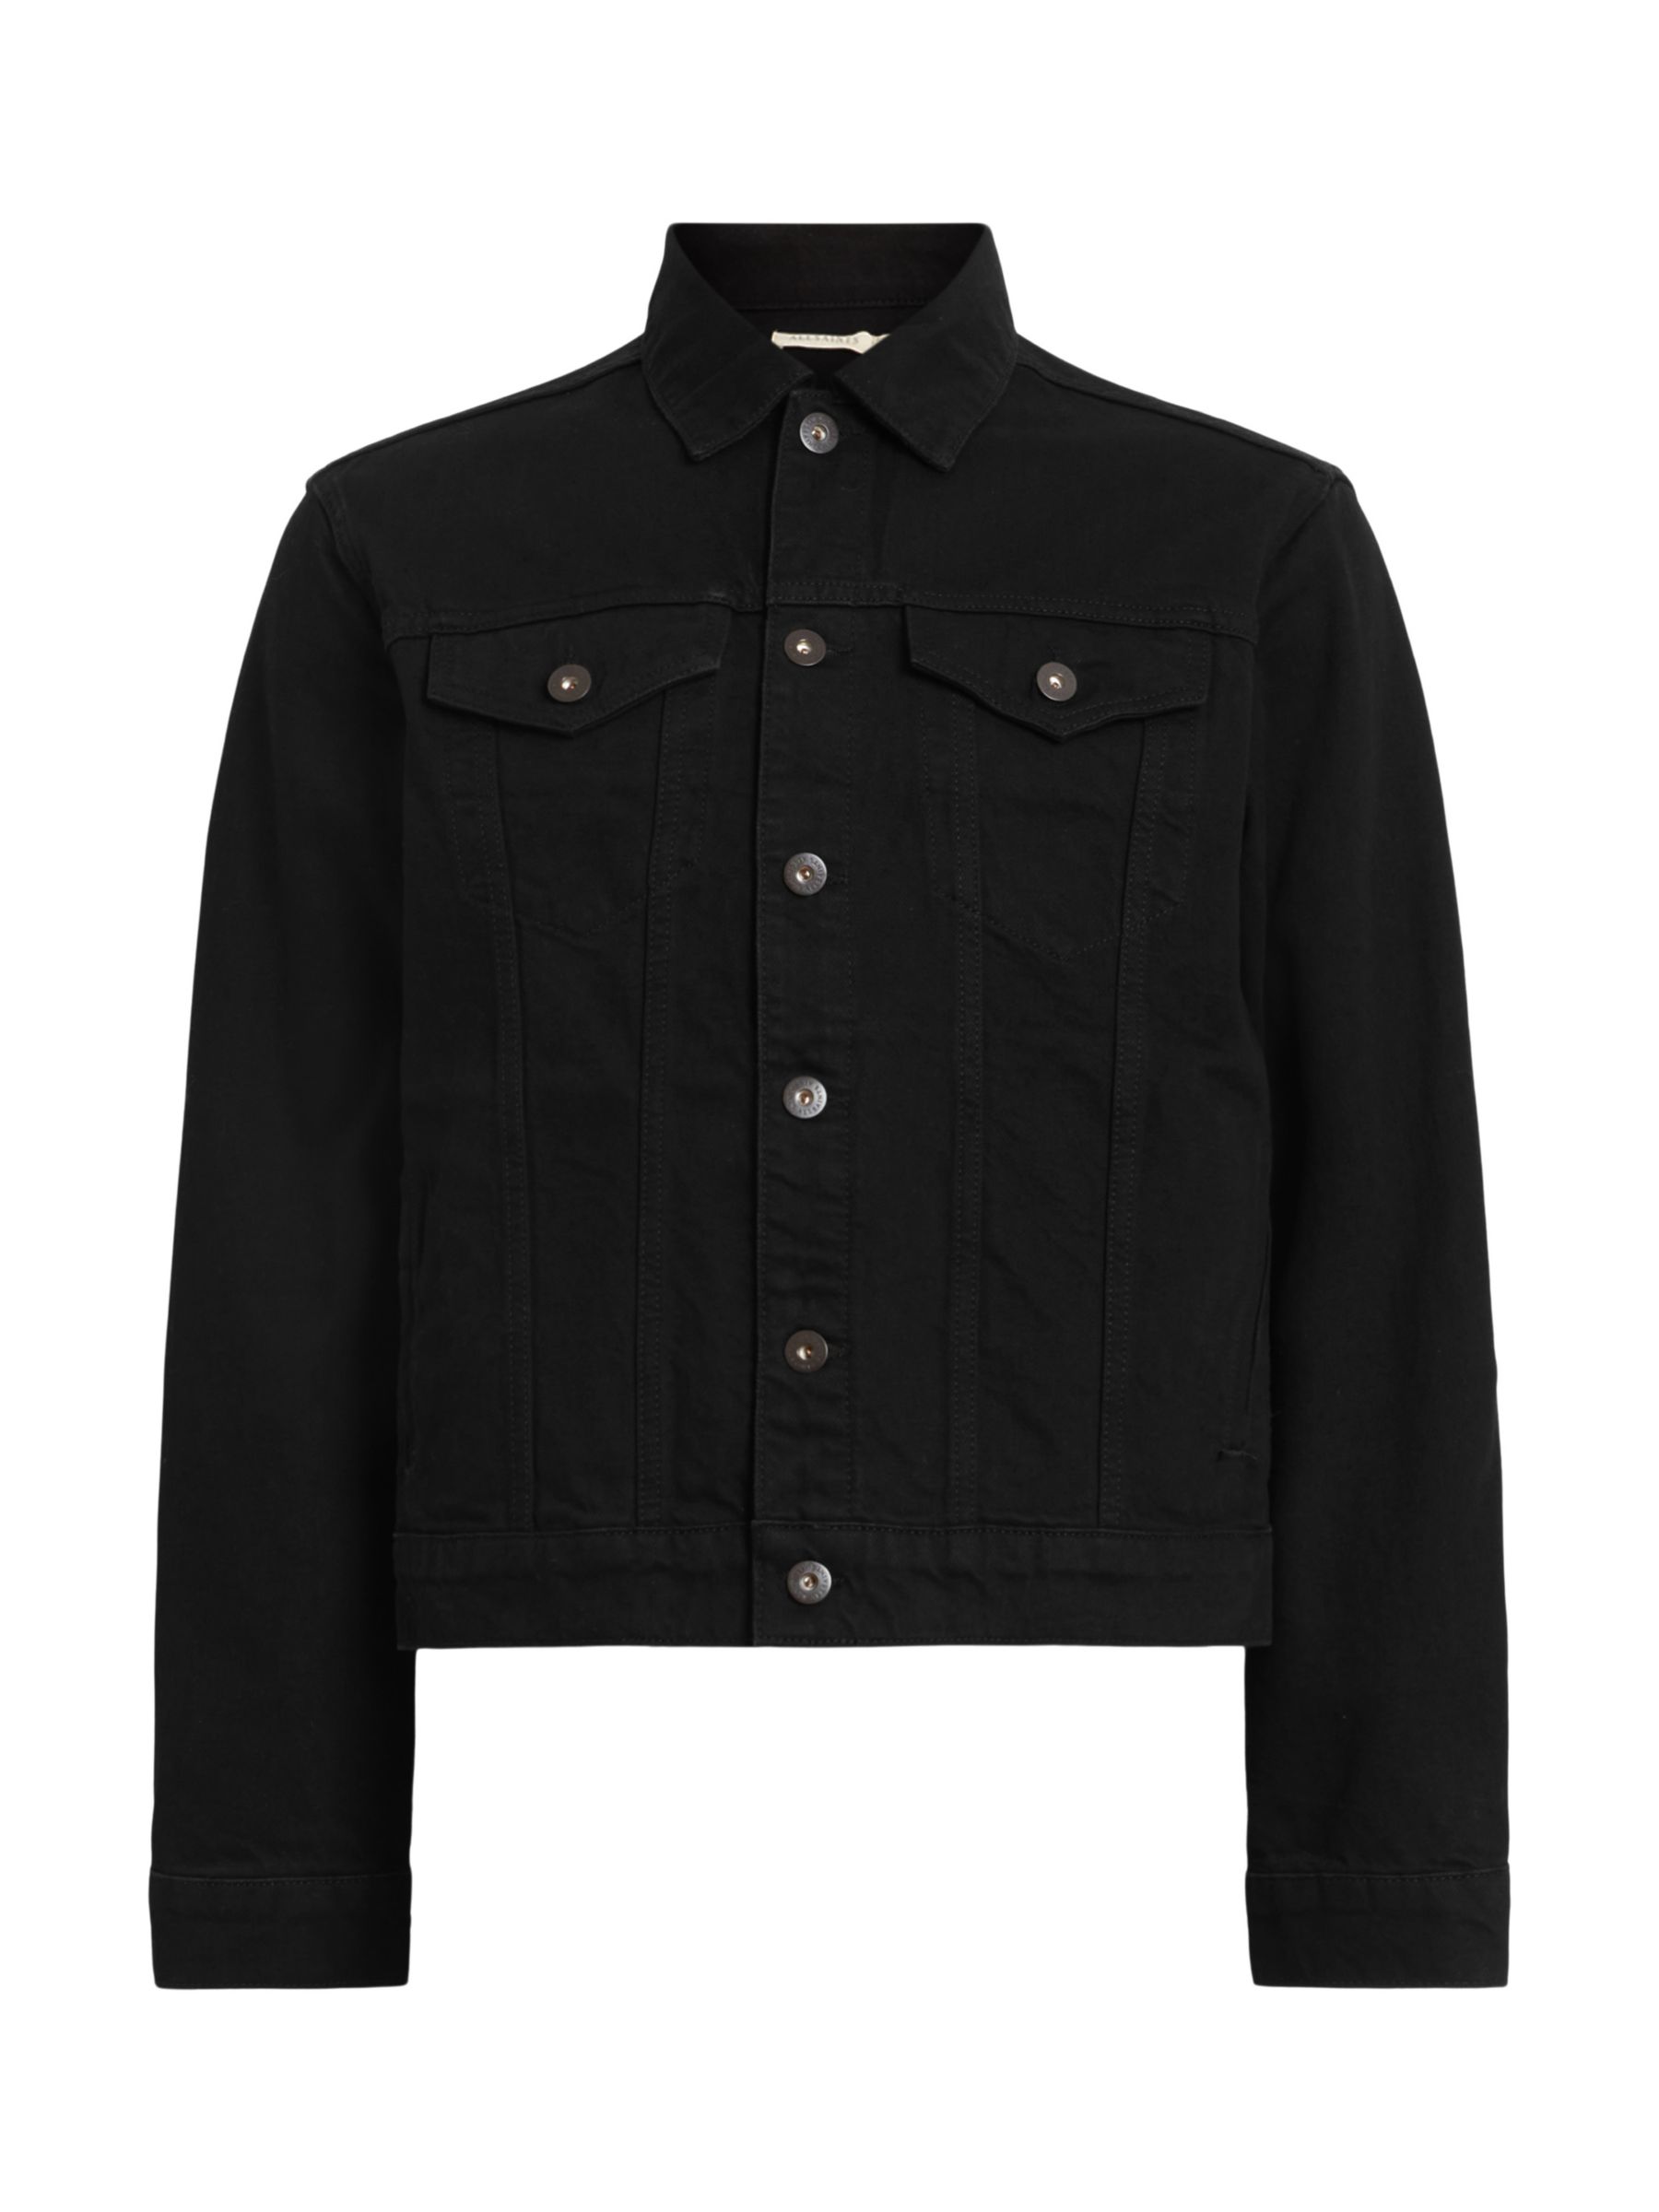 AllSaints Hebden Denim Jacket, Jet Black at John Lewis & Partners